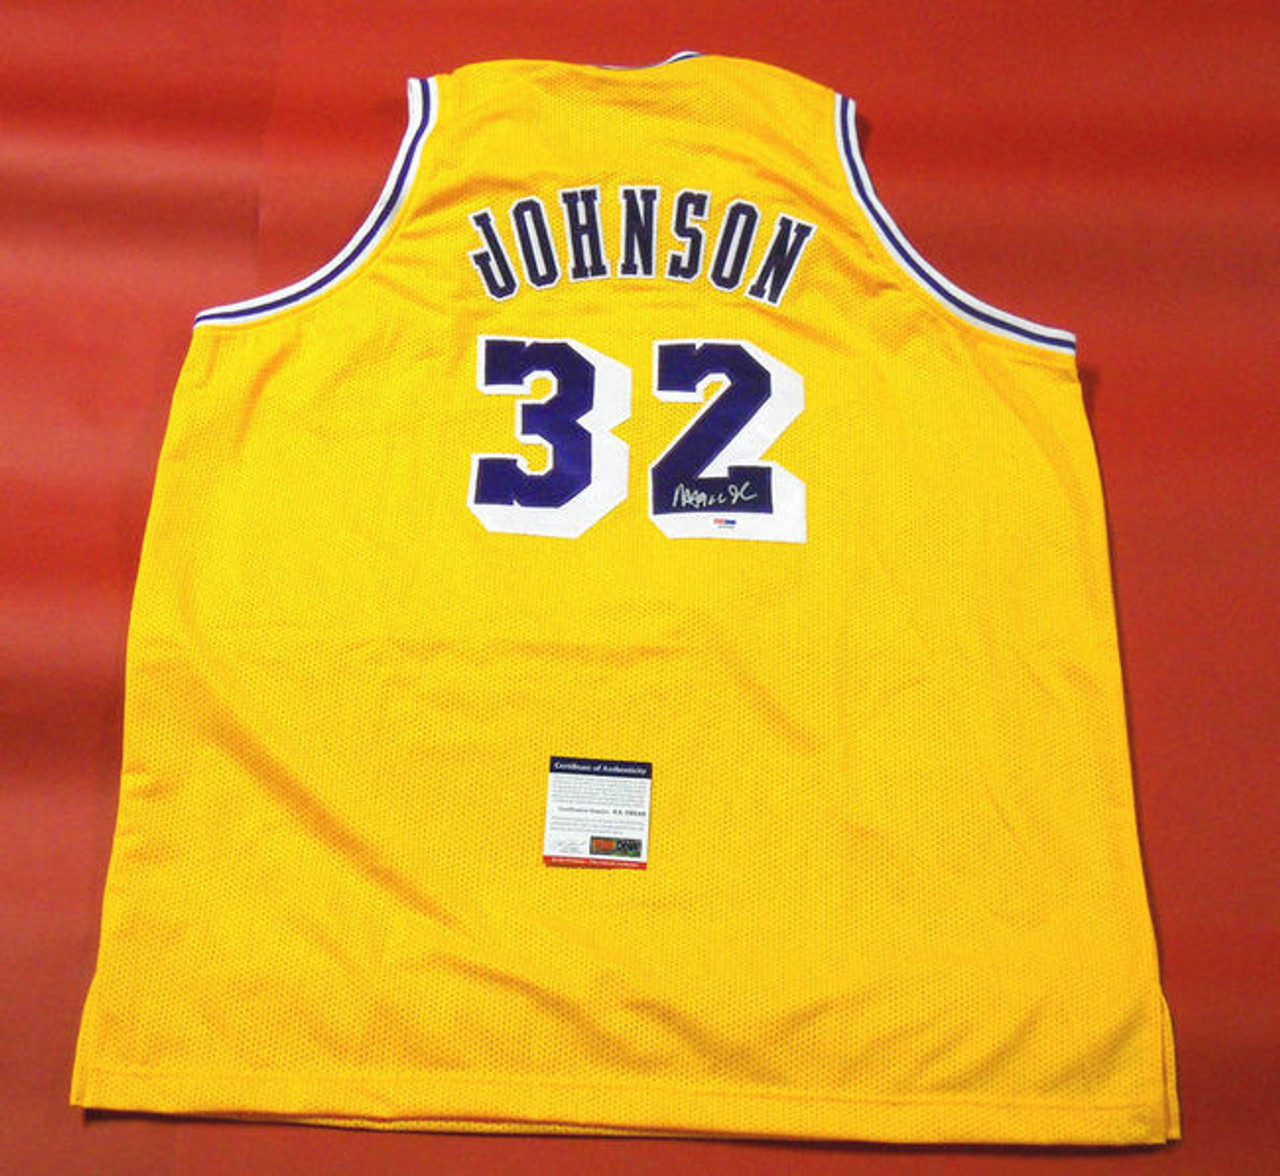 Dennis Rodman Signed Jersey (JSA COA) Los Angeles Lakers